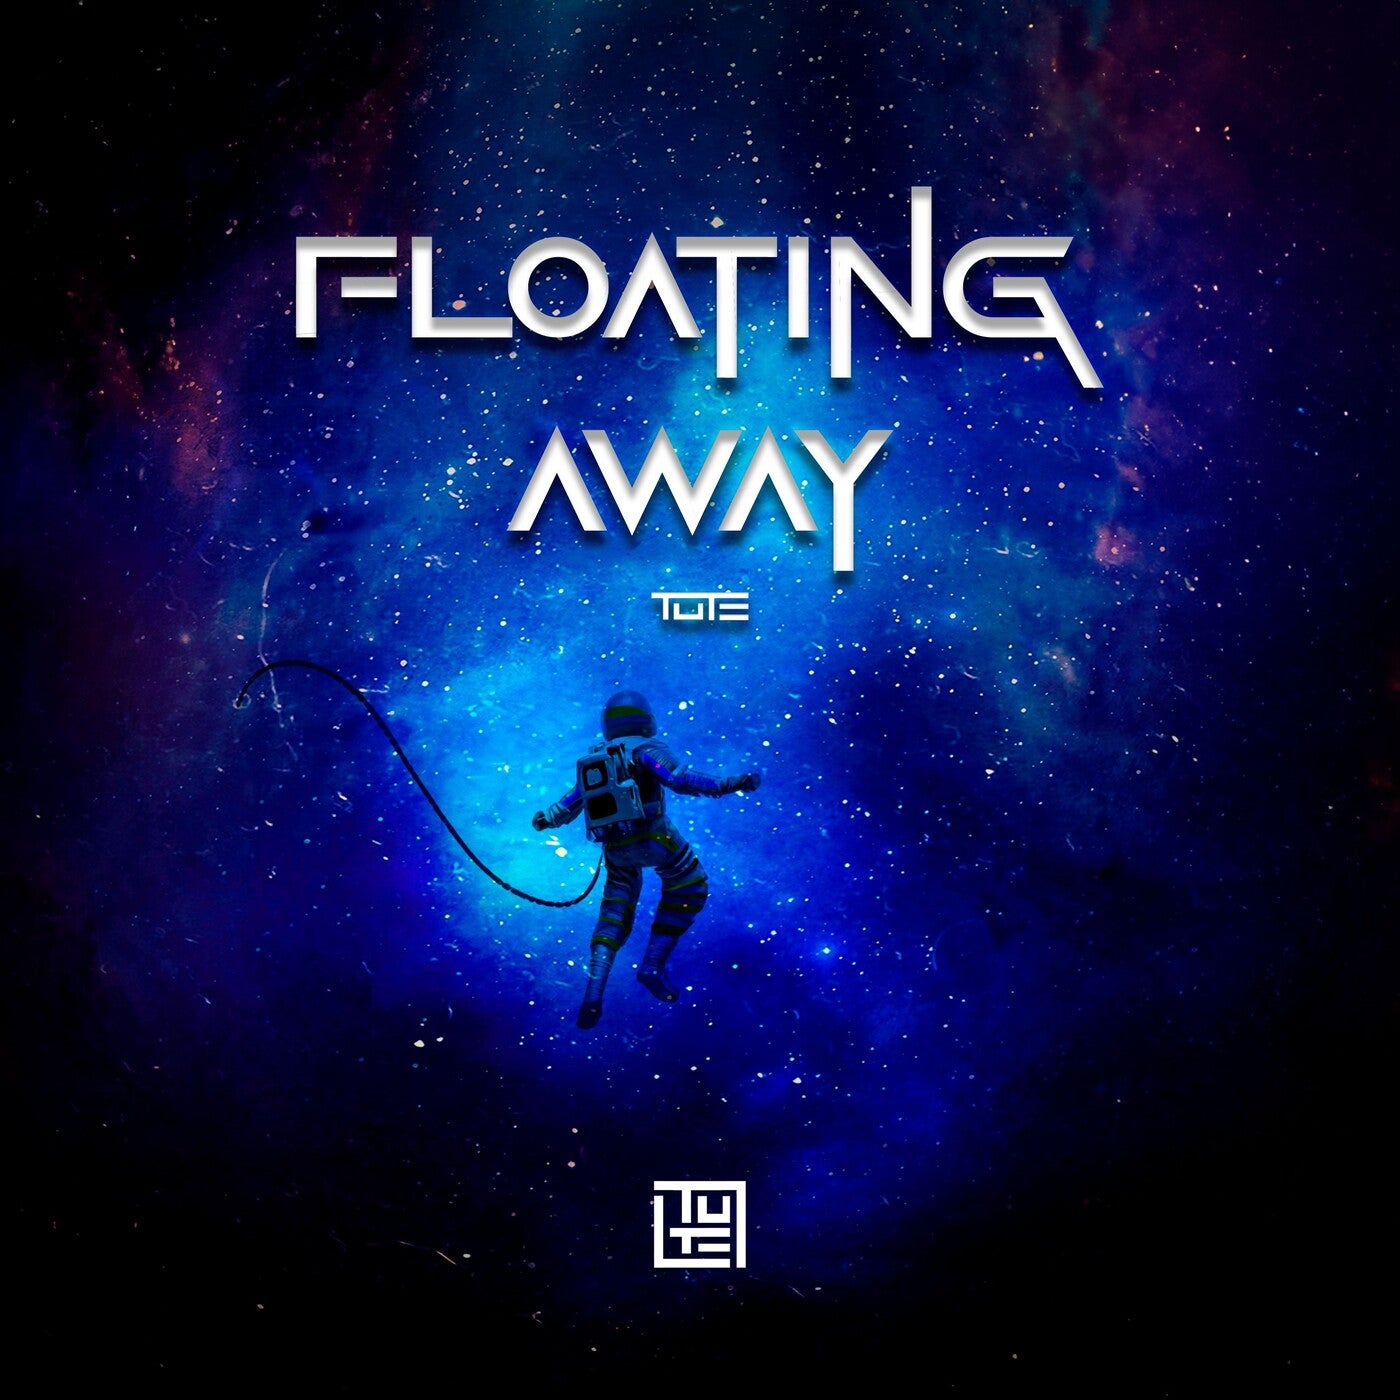 Floating away